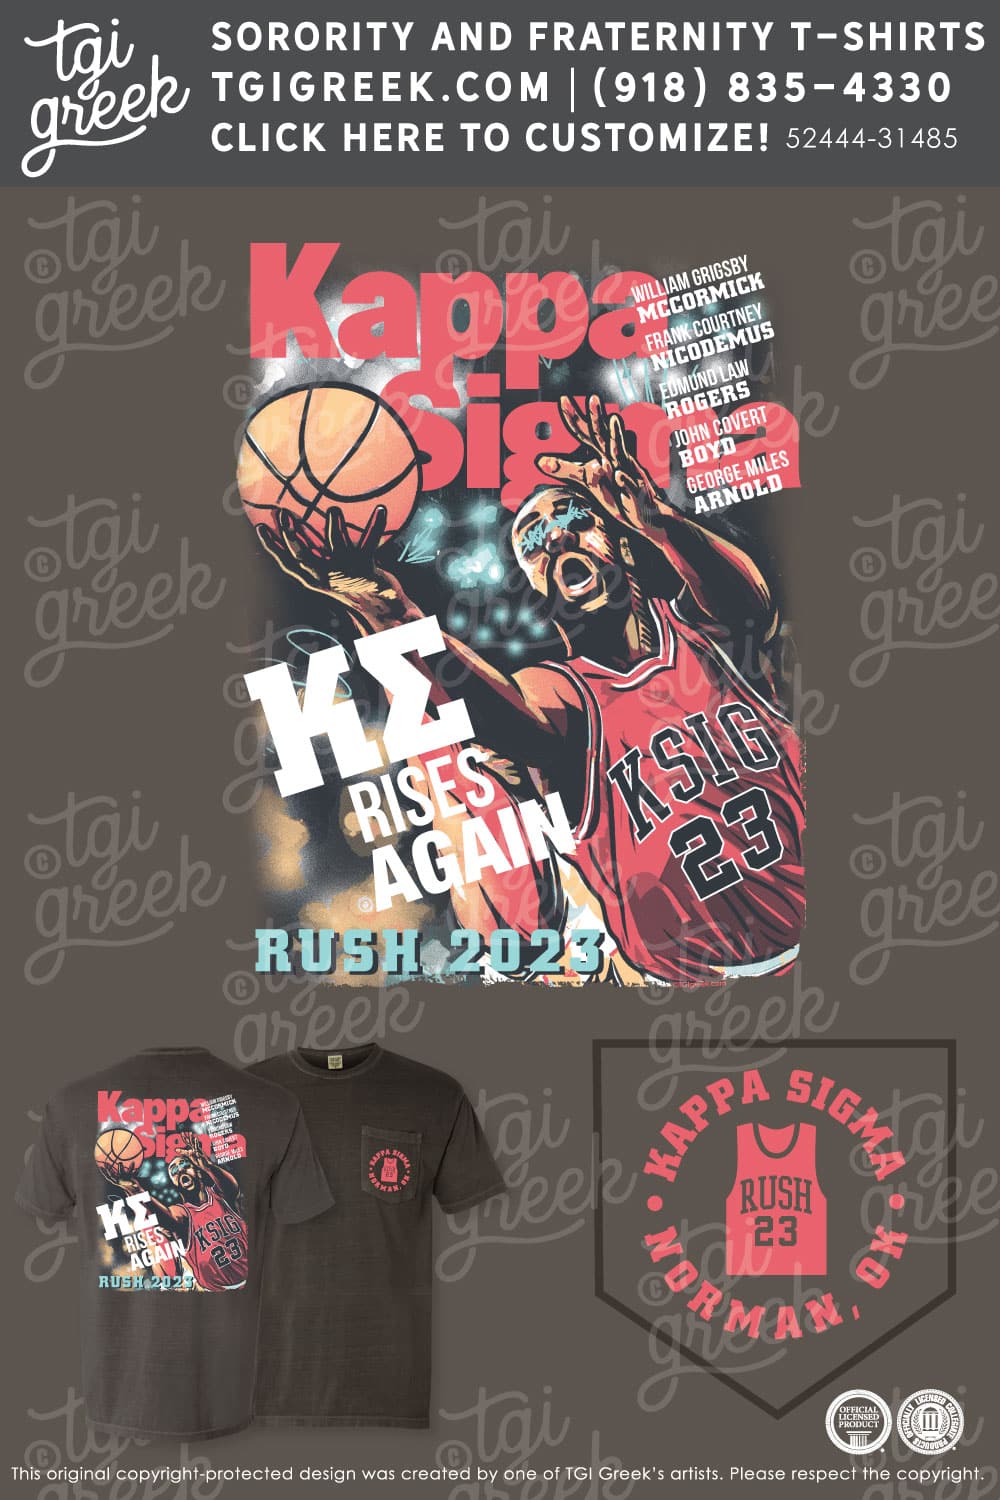 Kappa Sig Black Basketball Jersey